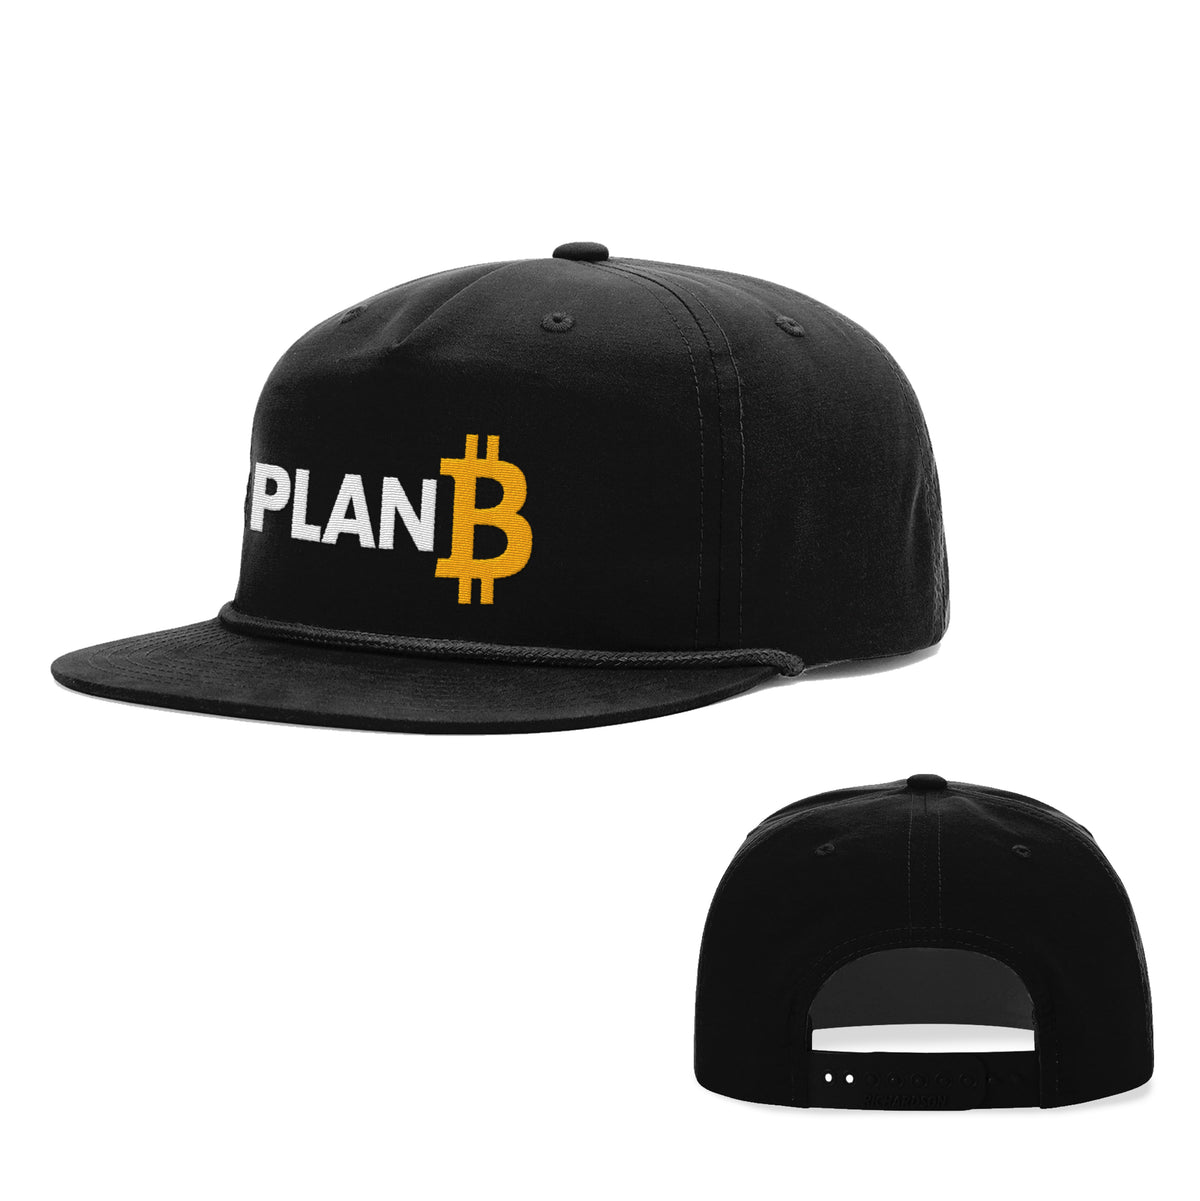 Plan B Bitcoin Rope Hats